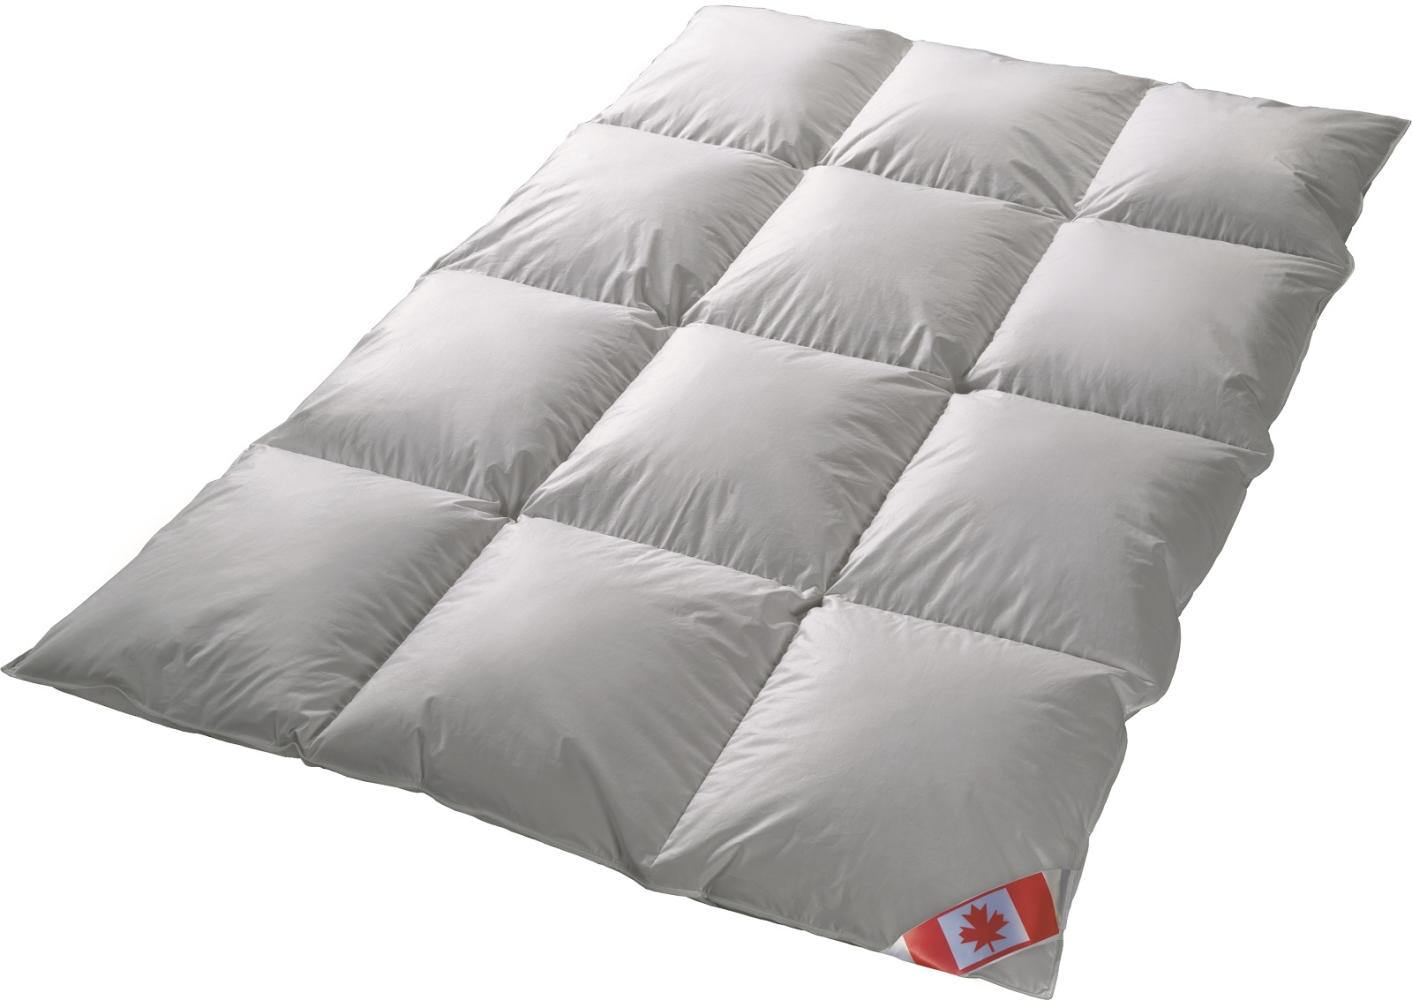 Canada extra warme Winter Decke Kassetten Hochsteg 100% Daune 200x220 cm C5 Bild 1